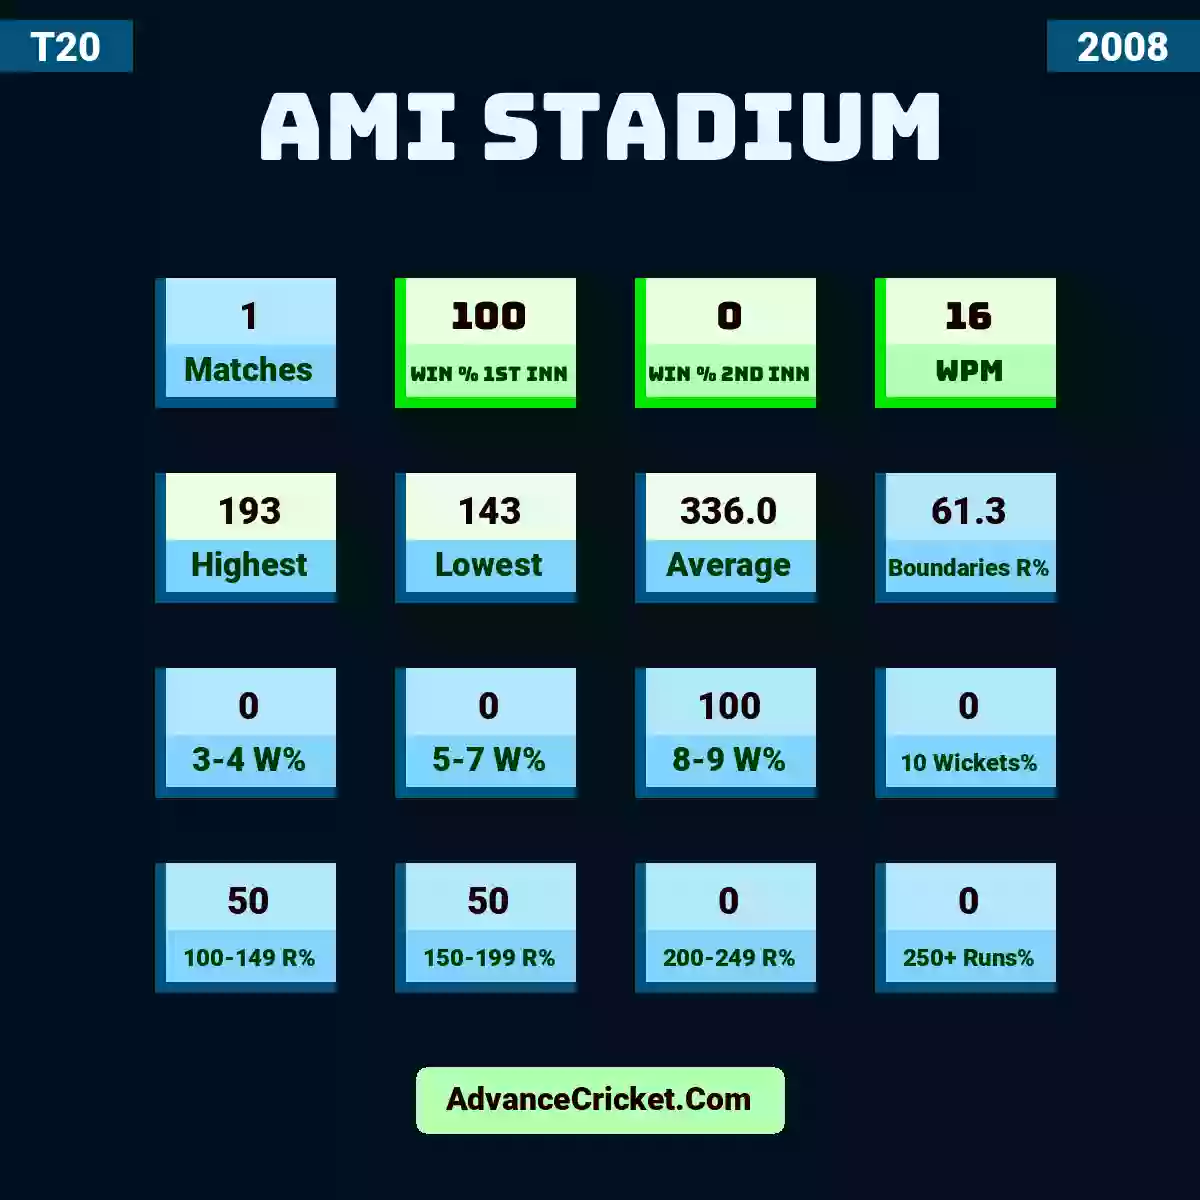 Image showing AMI Stadium with Matches: 1, Win % 1st Inn: 100, Win % 2nd Inn: 0, WPM: 16, Highest: 193, Lowest: 143, Average: 336.0, Boundaries R%: 61.3, 3-4 W%: 0, 5-7 W%: 0, 8-9 W%: 100, 10 Wickets%: 0, 100-149 R%: 50, 150-199 R%: 50, 200-249 R%: 0, 250+ Runs%: 0.